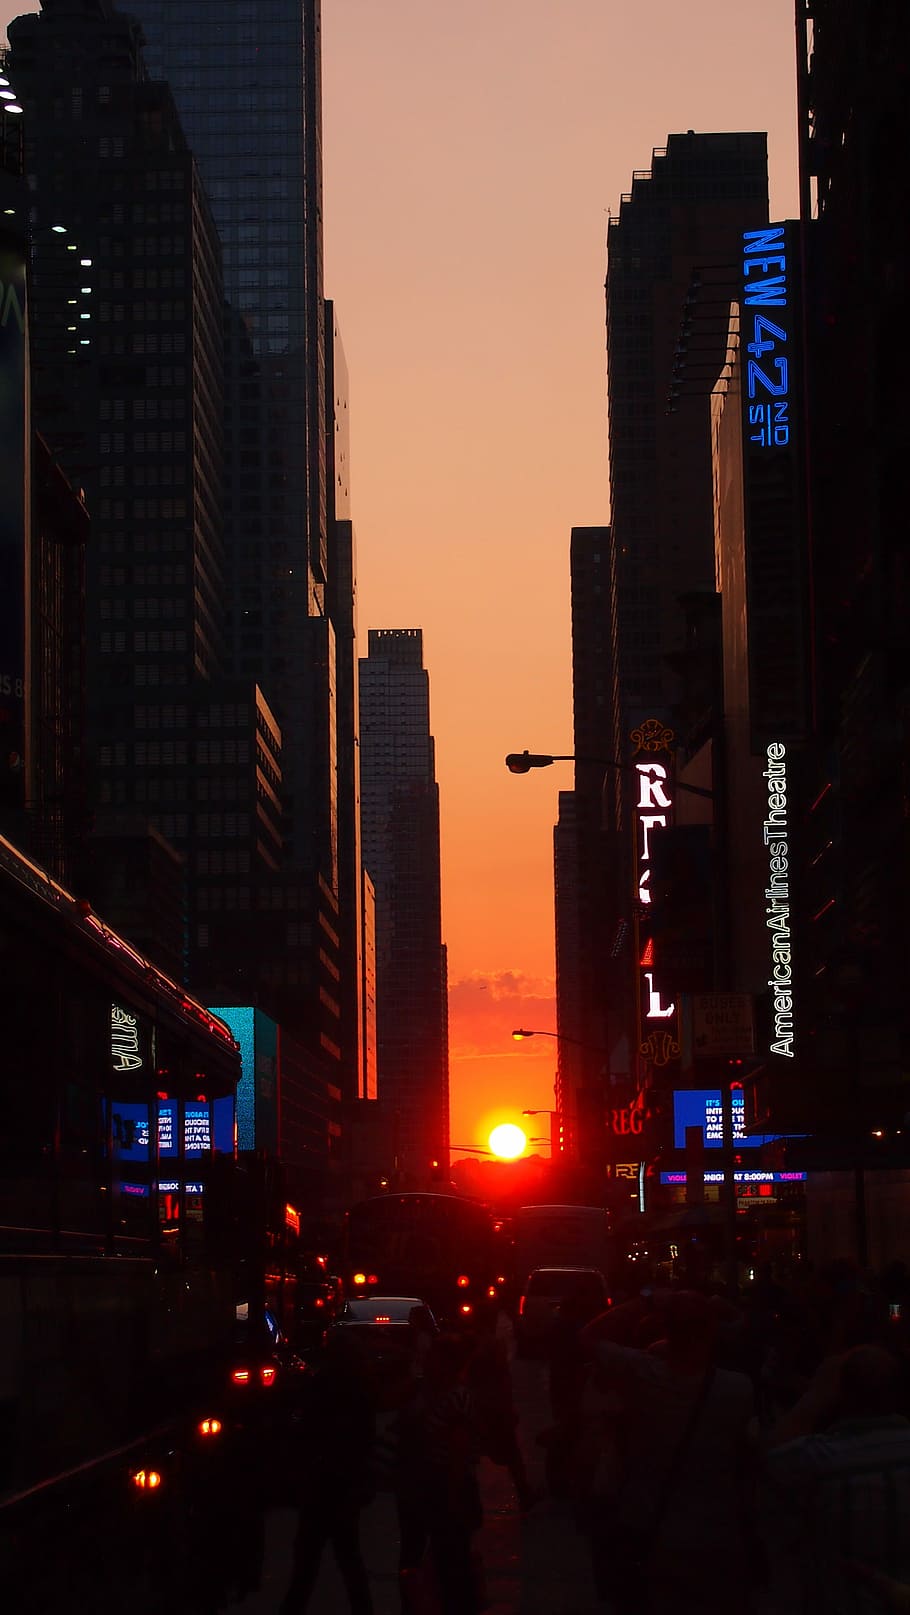 Nueva York, Manhattan, Estados Unidos, Noche, puesta de sol, manhattanhenge, time square, escena urbana, calle, rascacielos